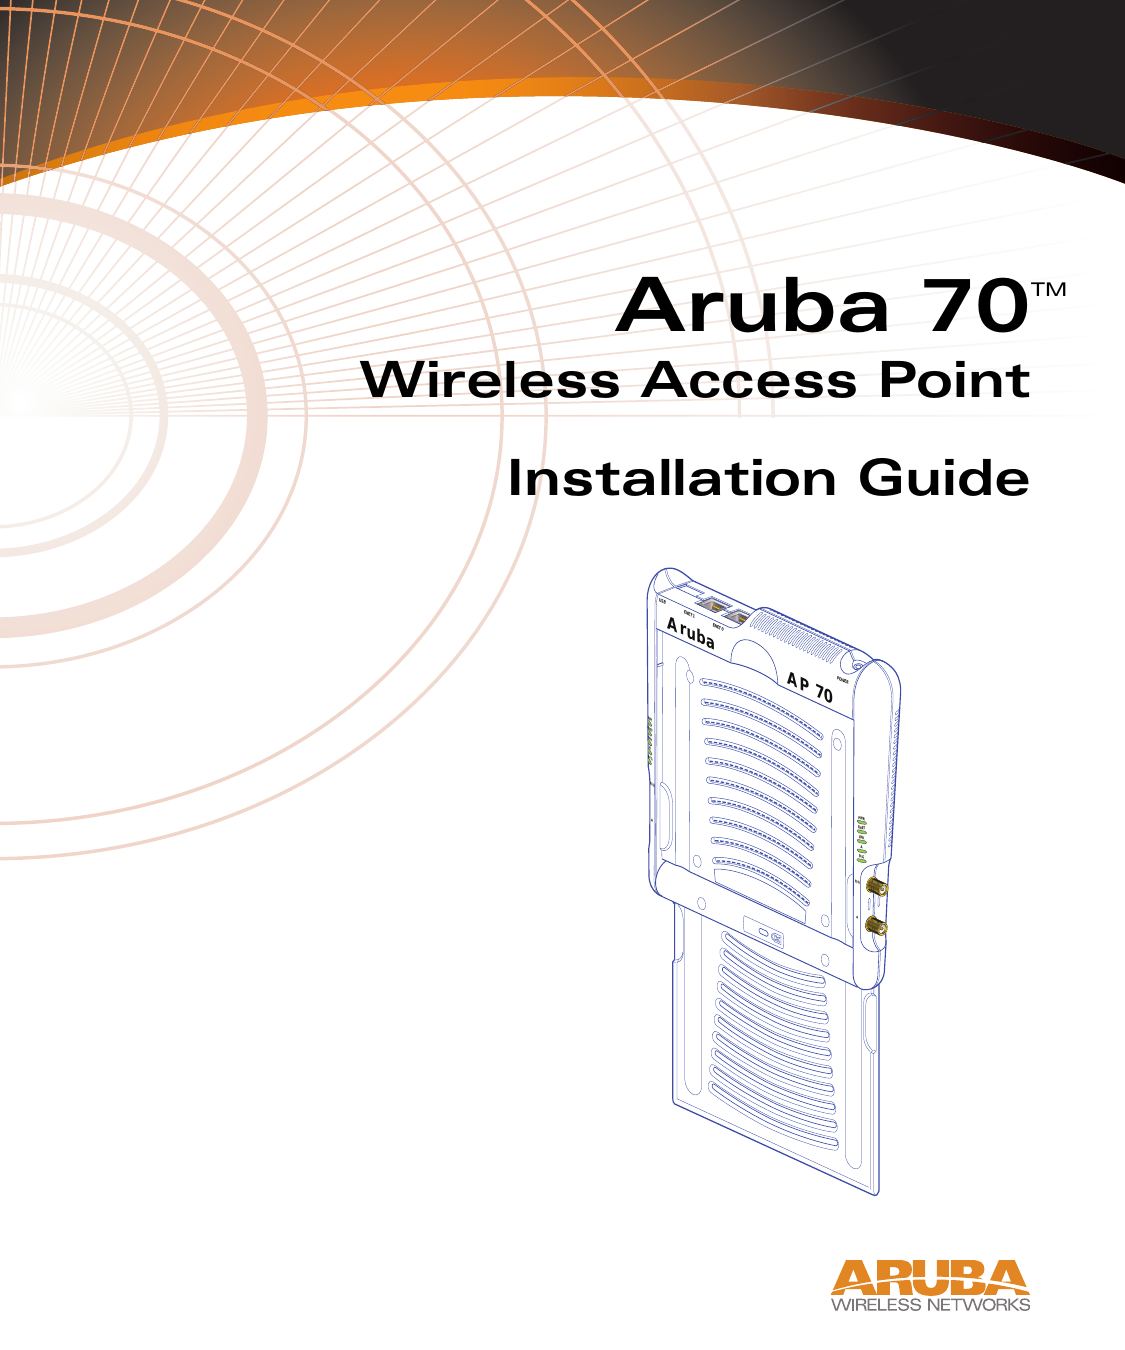 Aruba 70Wireless Access PointInstallation GuideTMAP 70ArubaUSB ENET 1 ENET 0 POWERPWRENETLNKAAB/GB/GWRNETNKAB/GAB/G